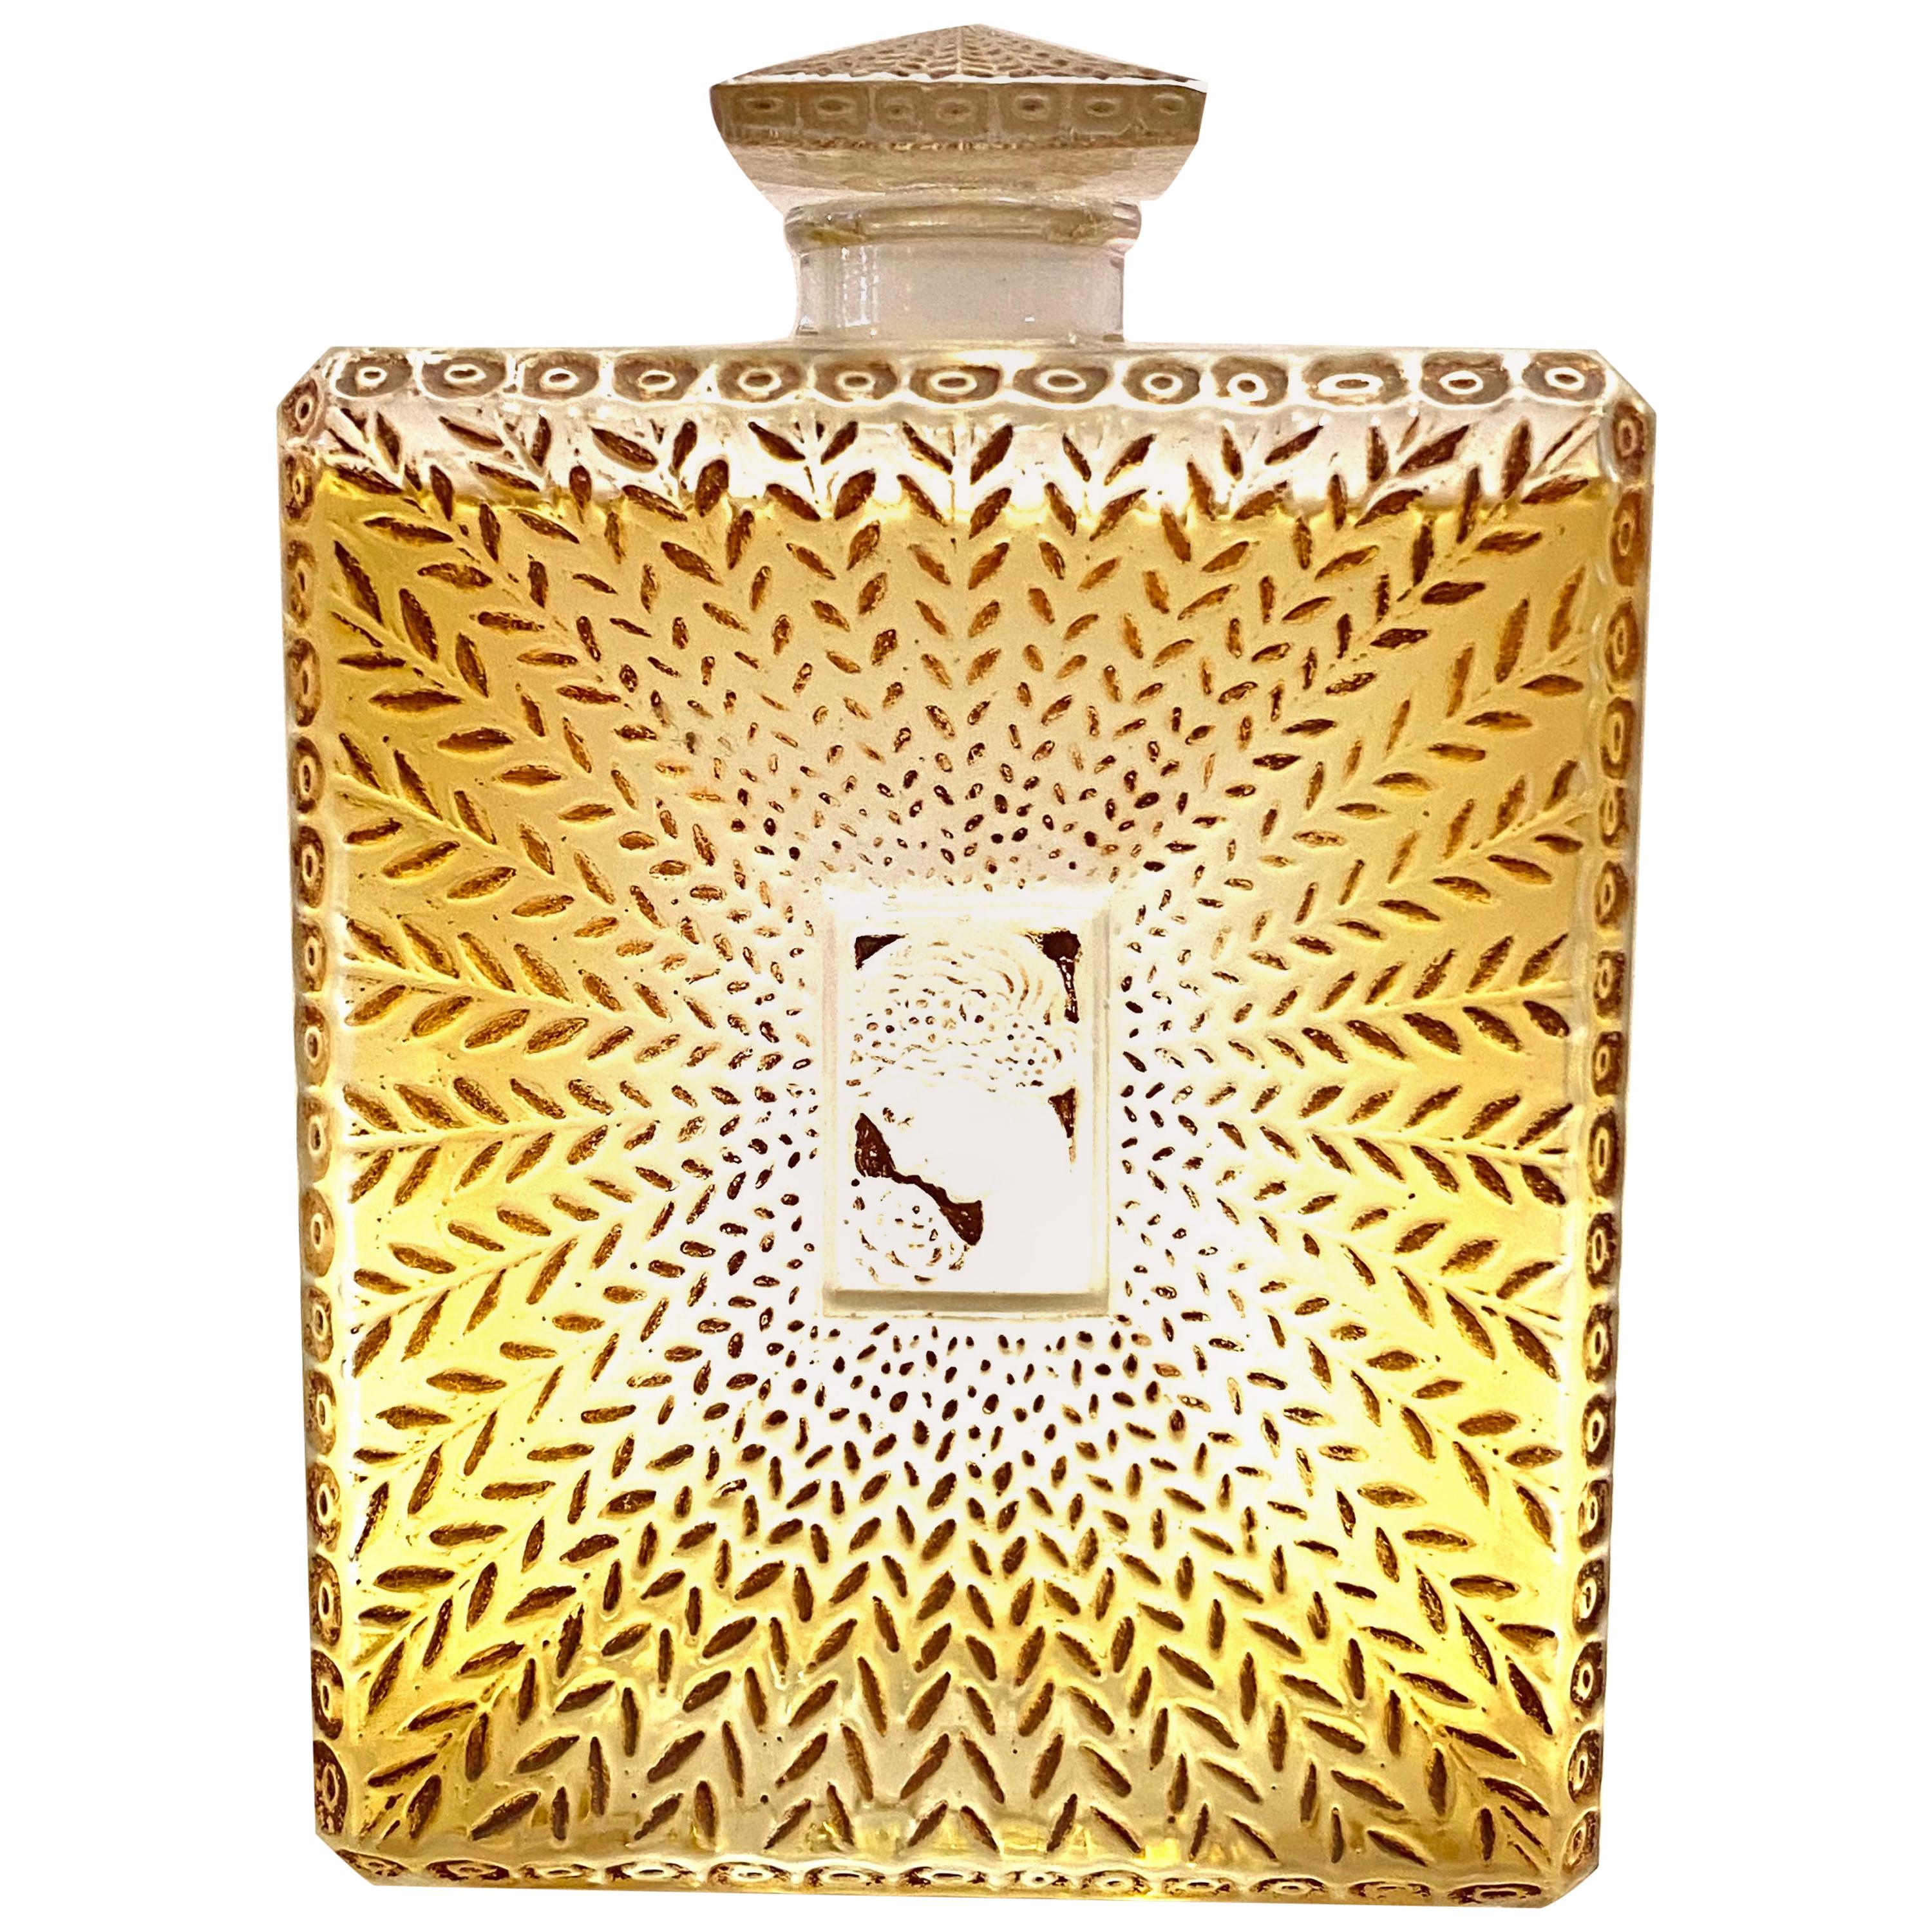 1925 Rene Lalique La Belle Saison Houbigant Perfume Bottle Sepia Stained Glass